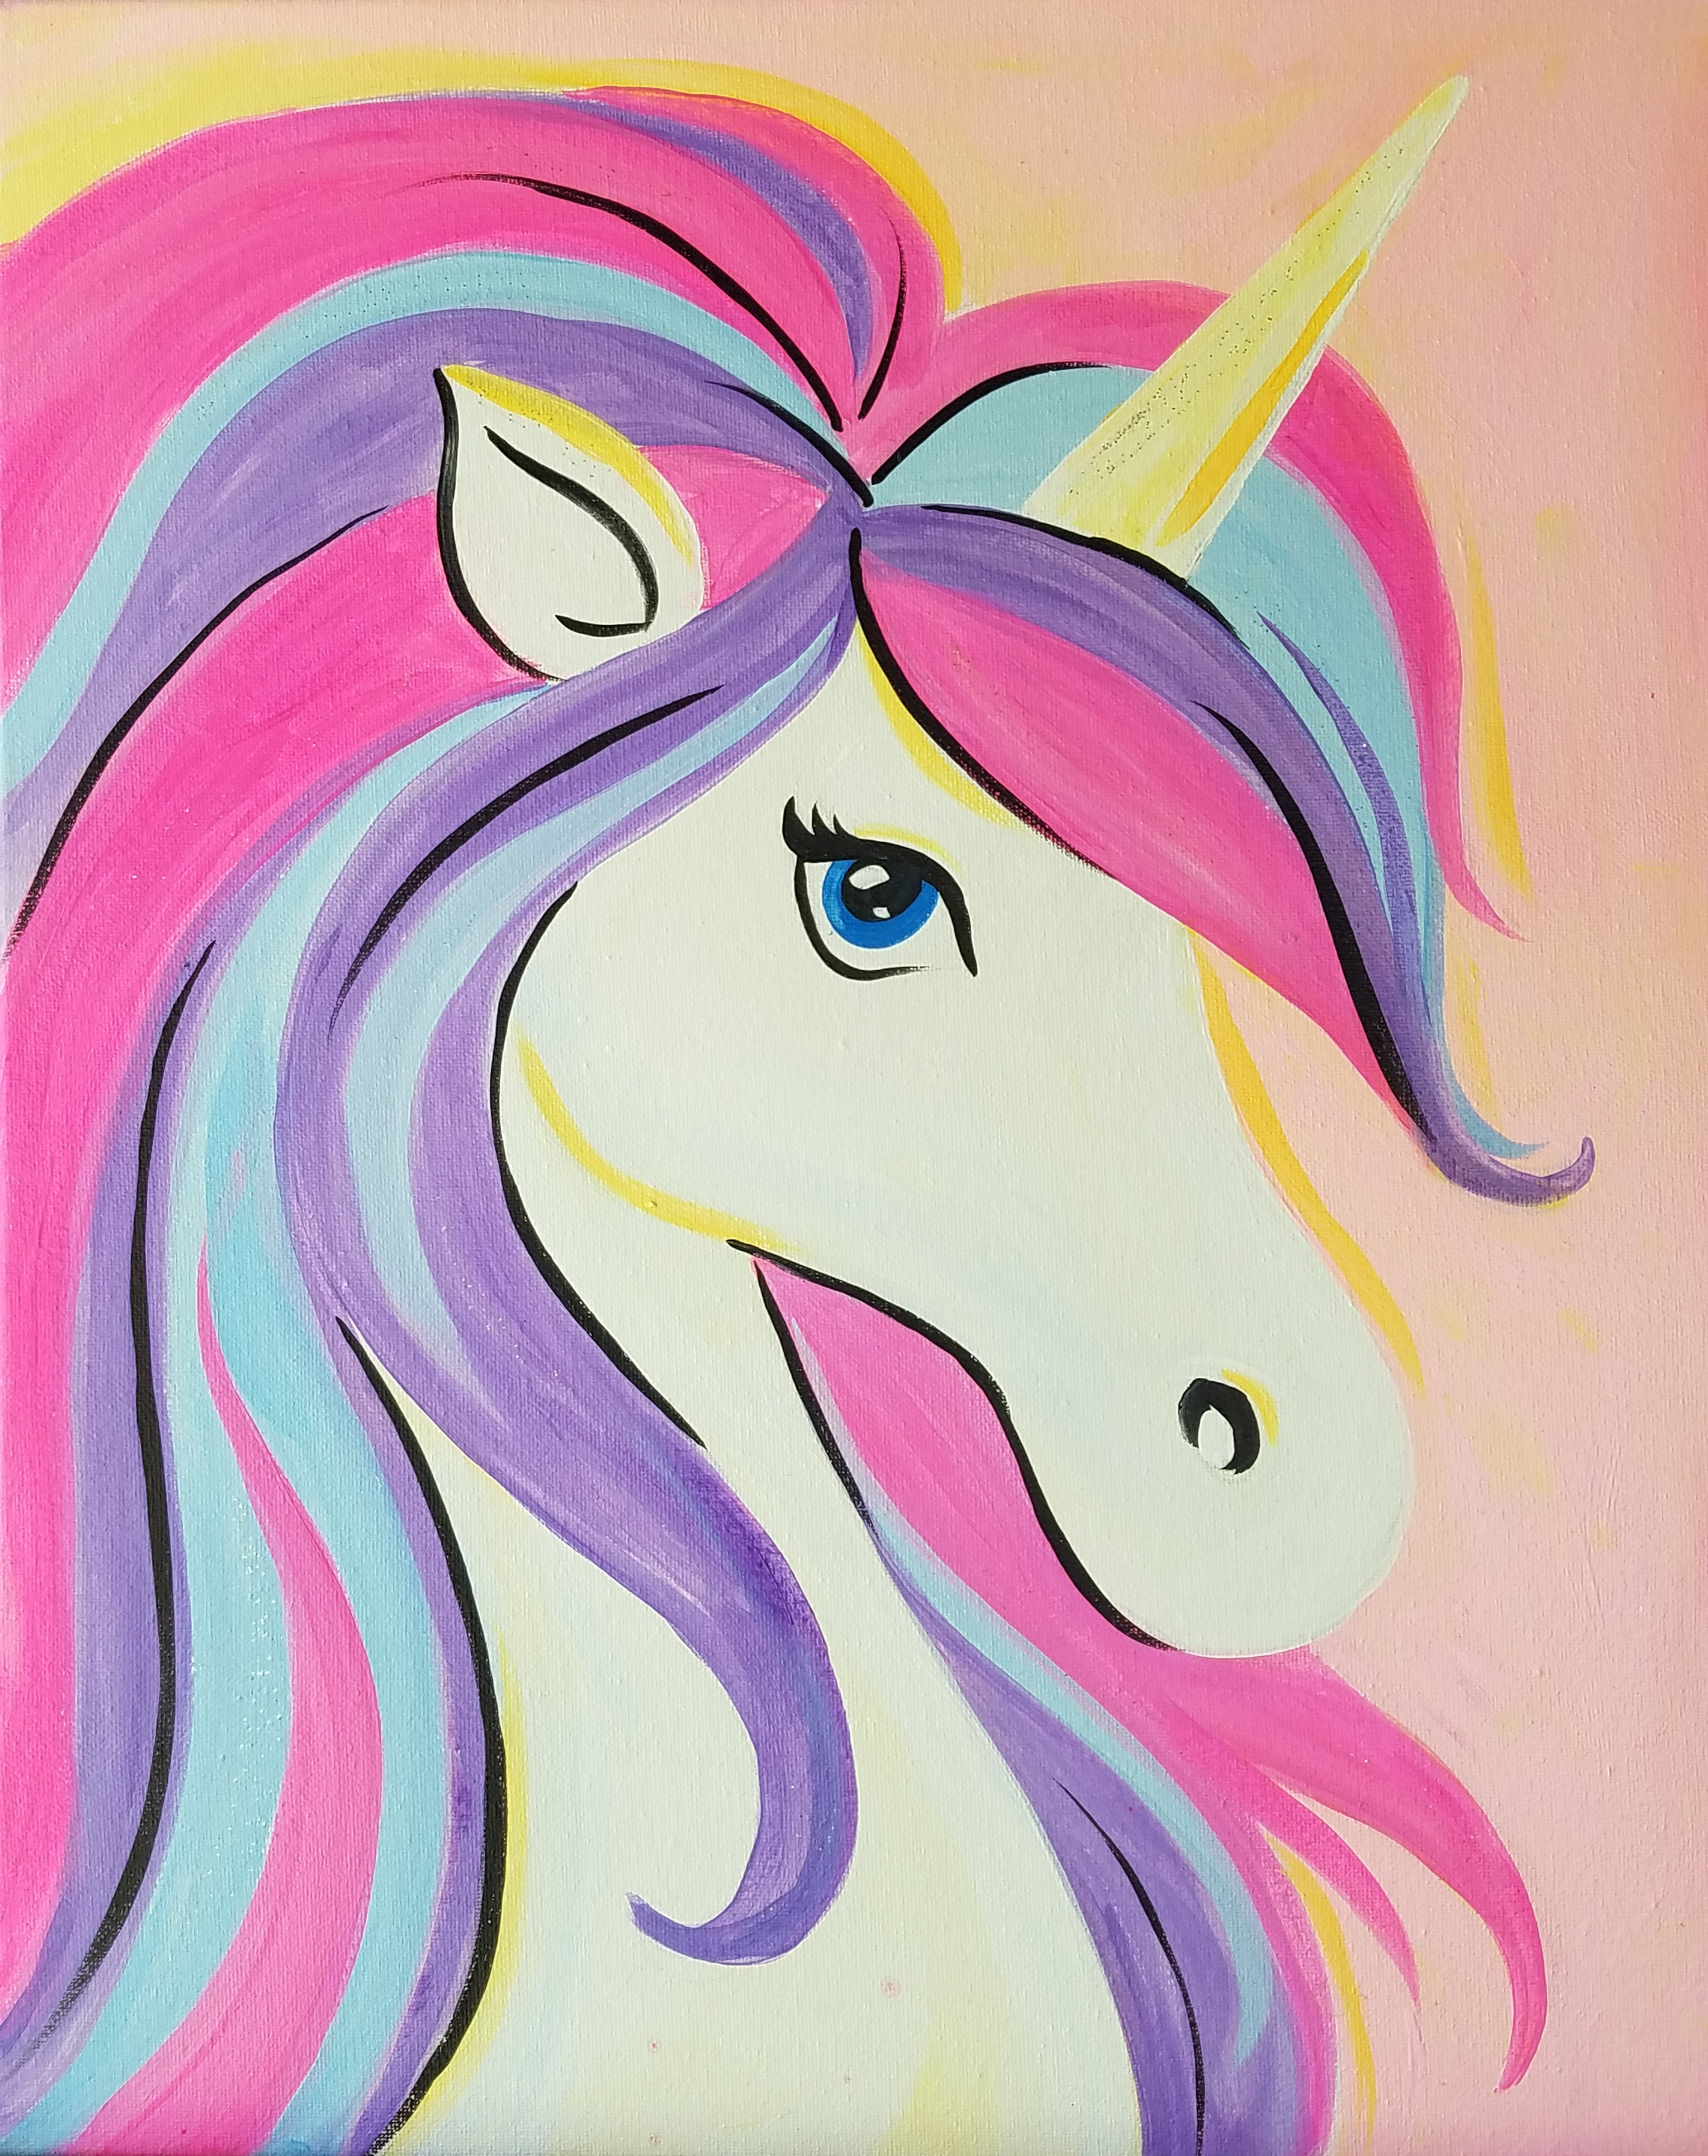 Unicorn Canvas Paint Art Kit